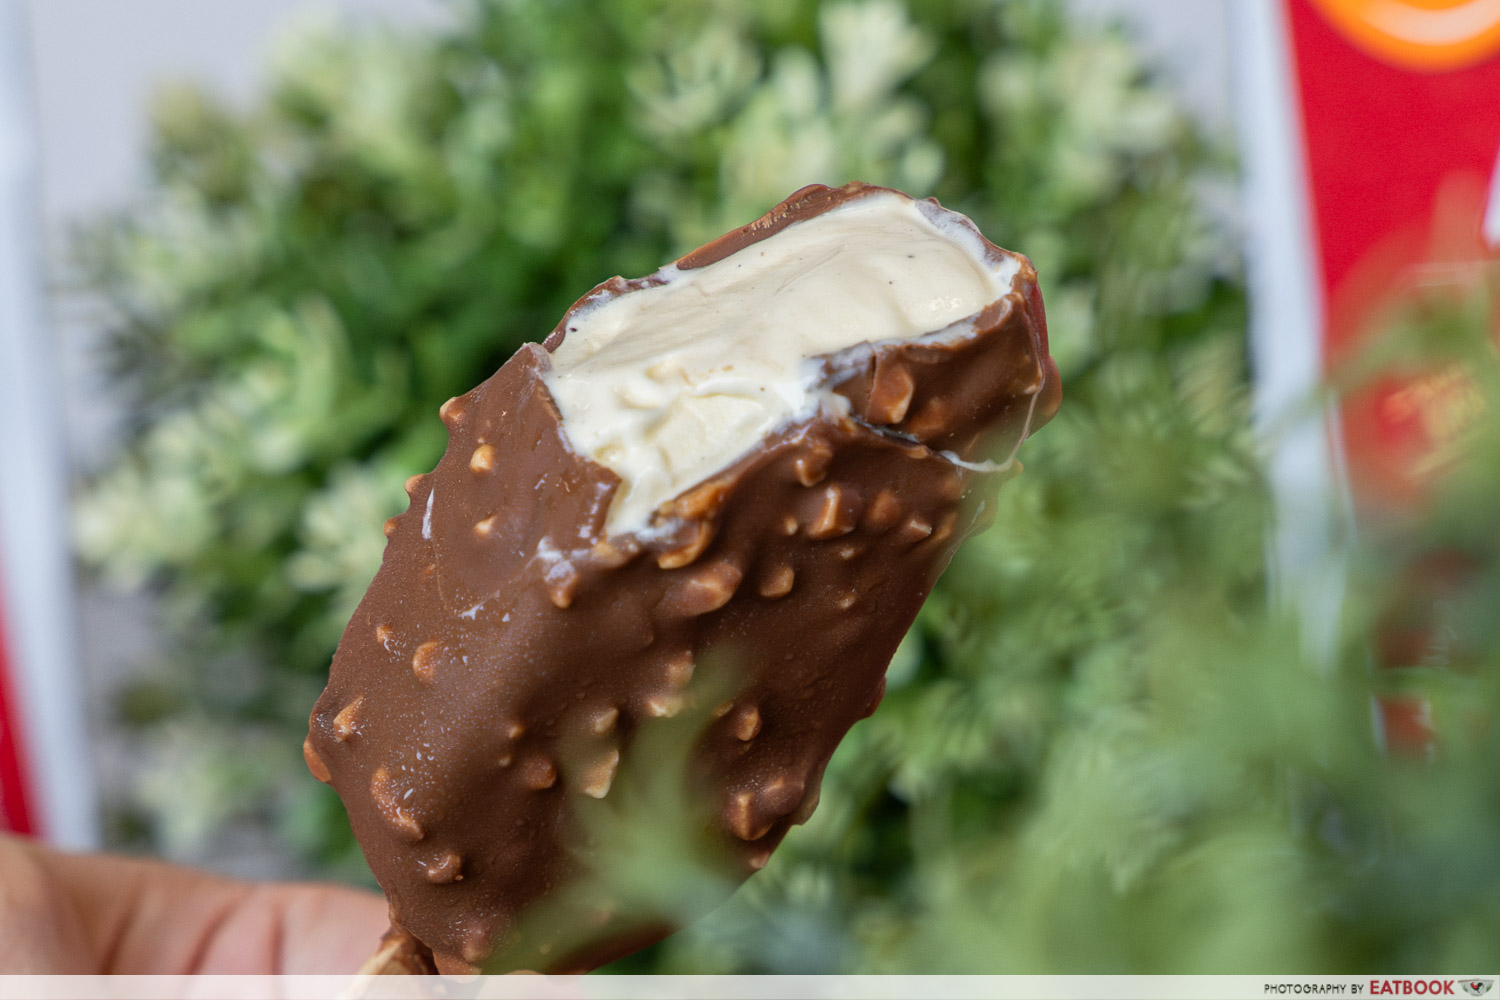 harvest fields ice cream - crunchy chocolate almond mini stick detail